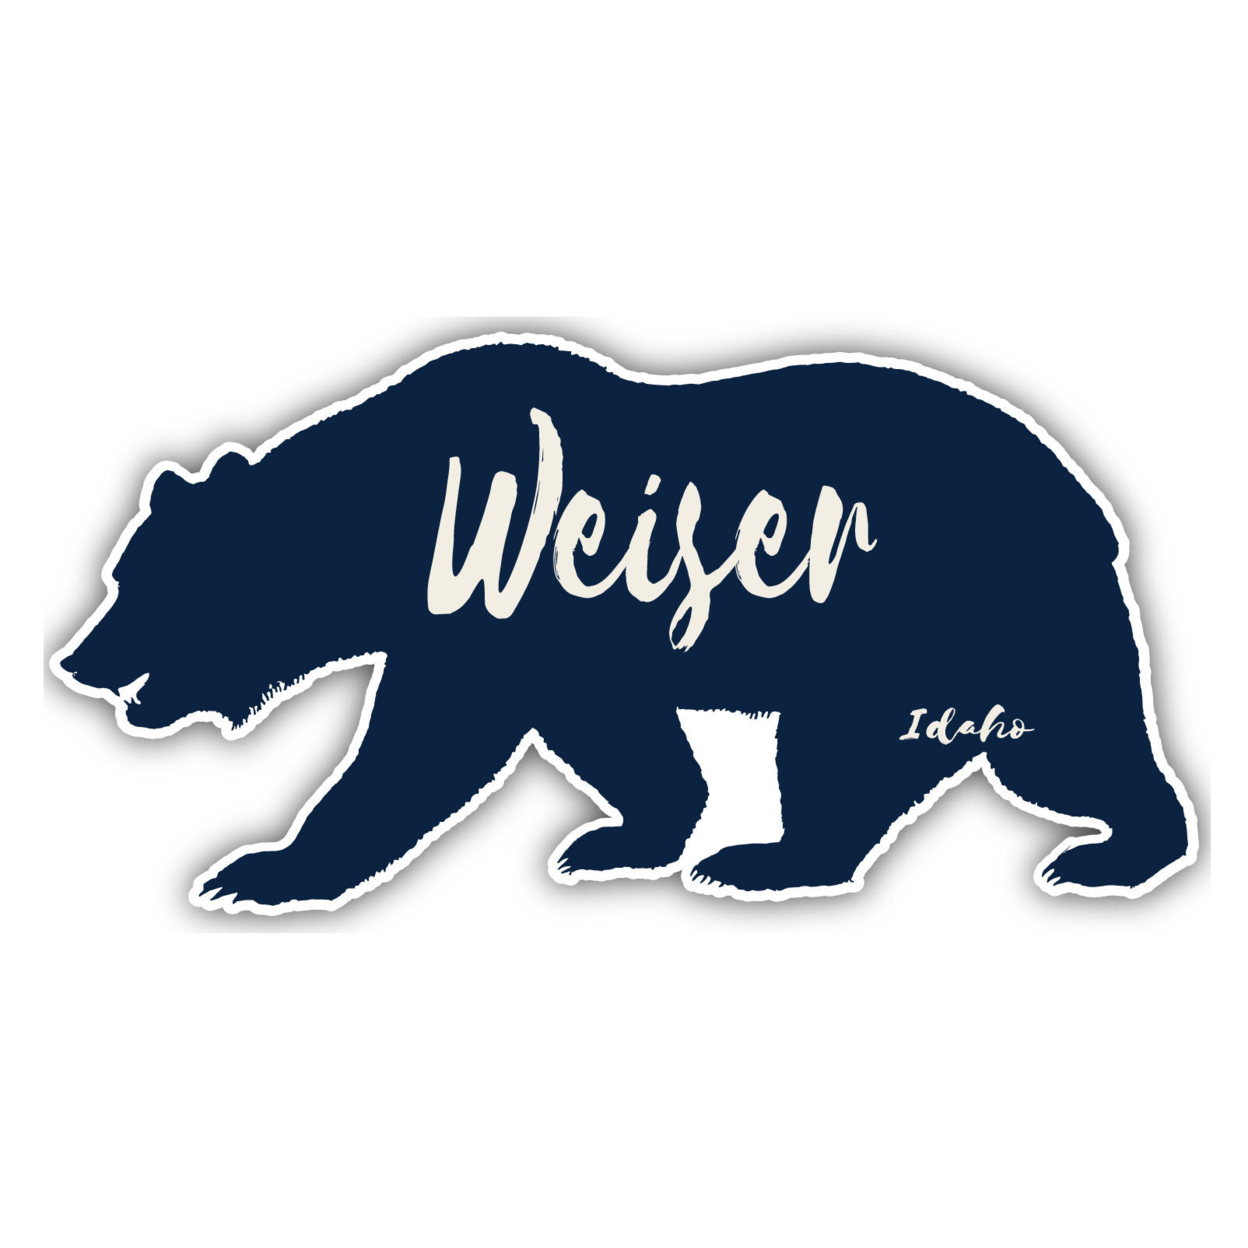 Weiser Idaho Souvenir Decorative Stickers (Choose Theme And Size) - Single Unit, 2-Inch, Bear